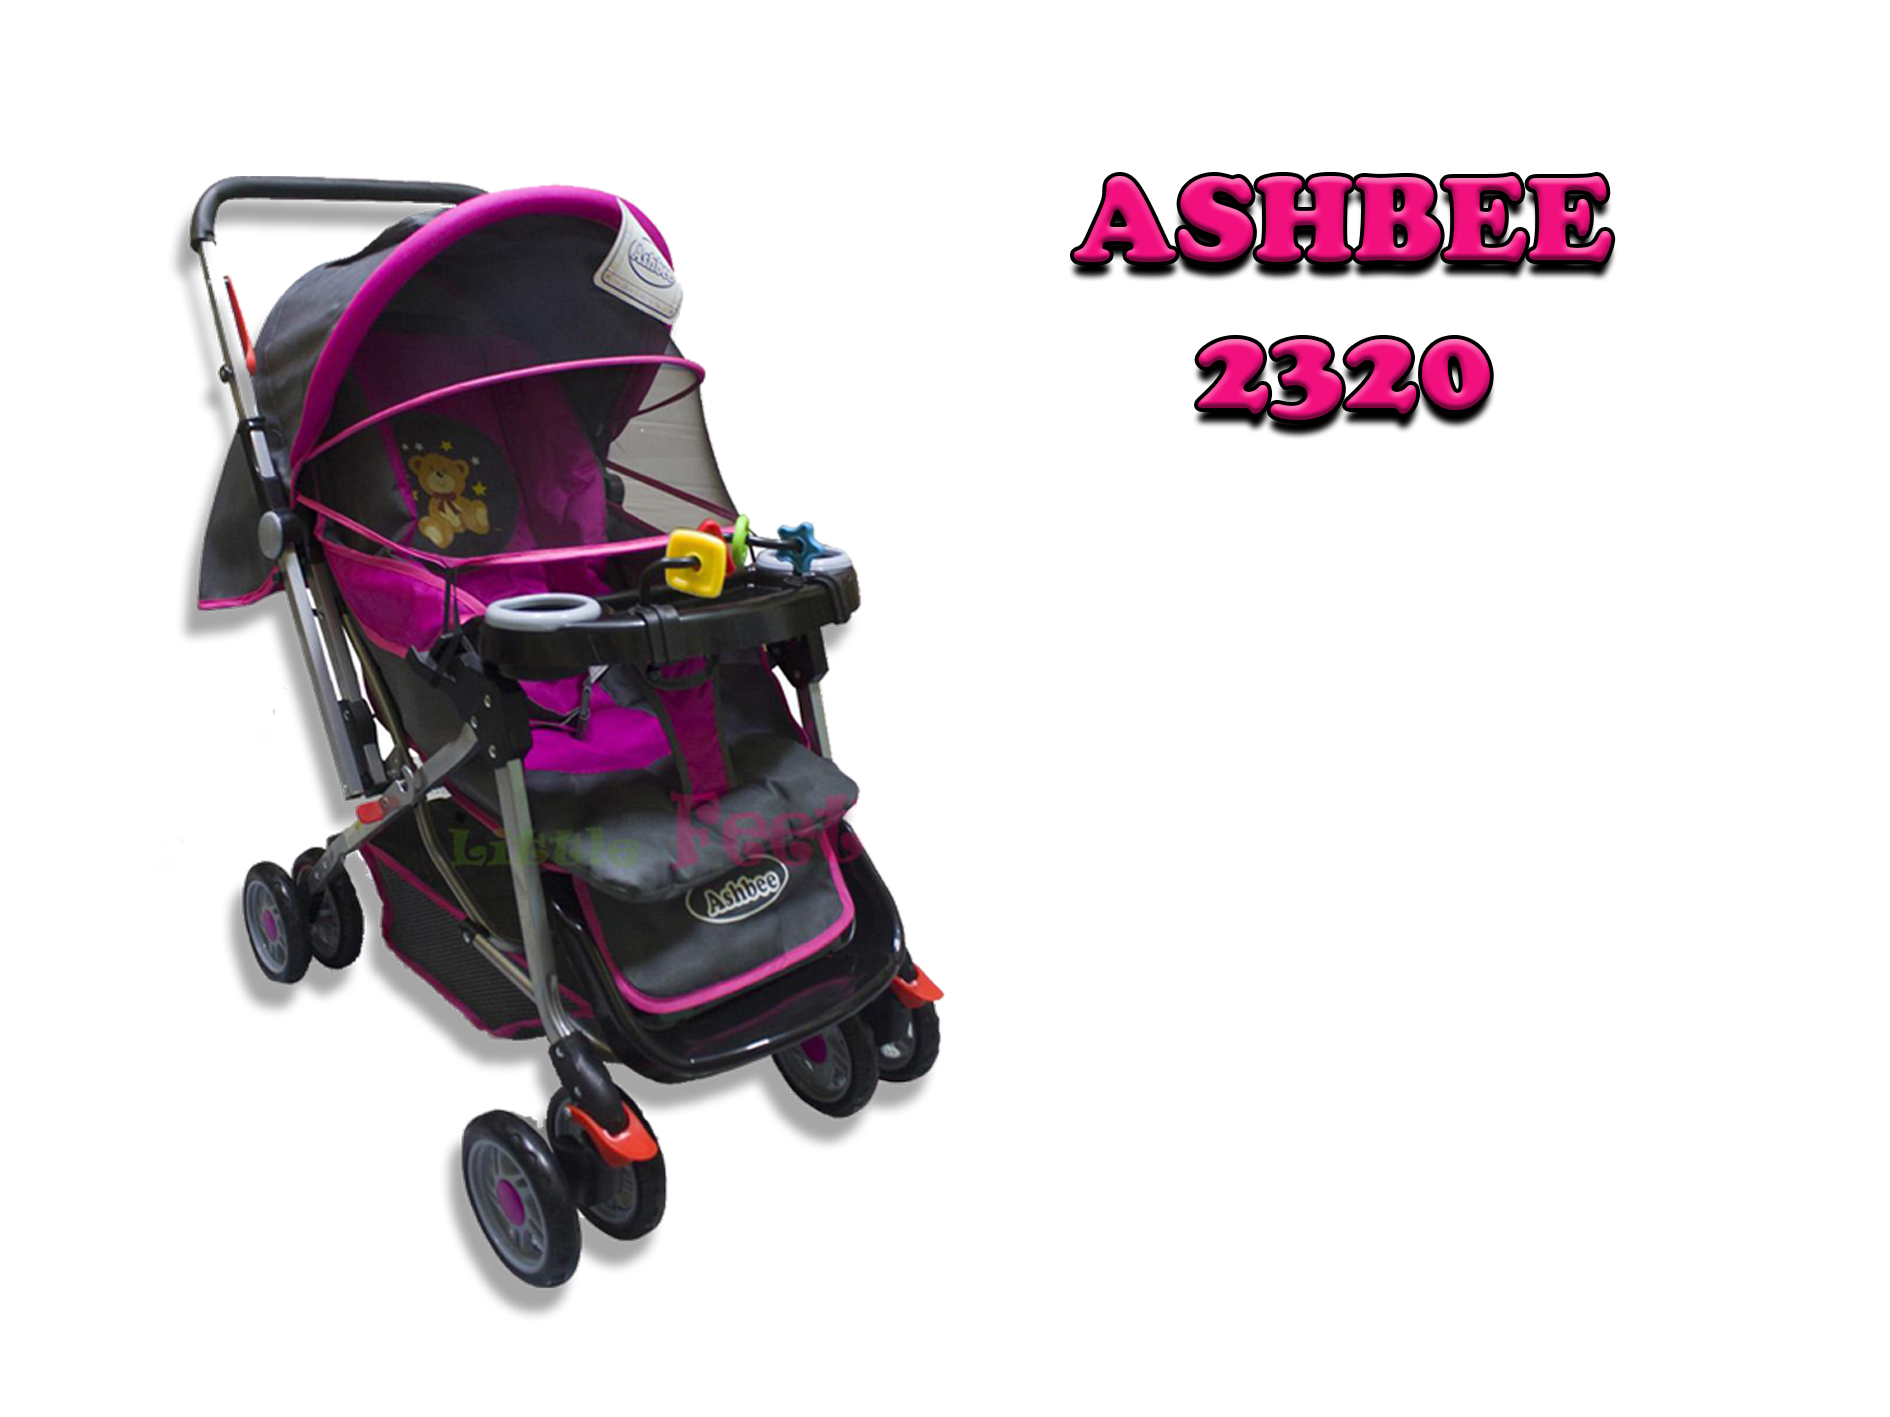 ashbee stroller price